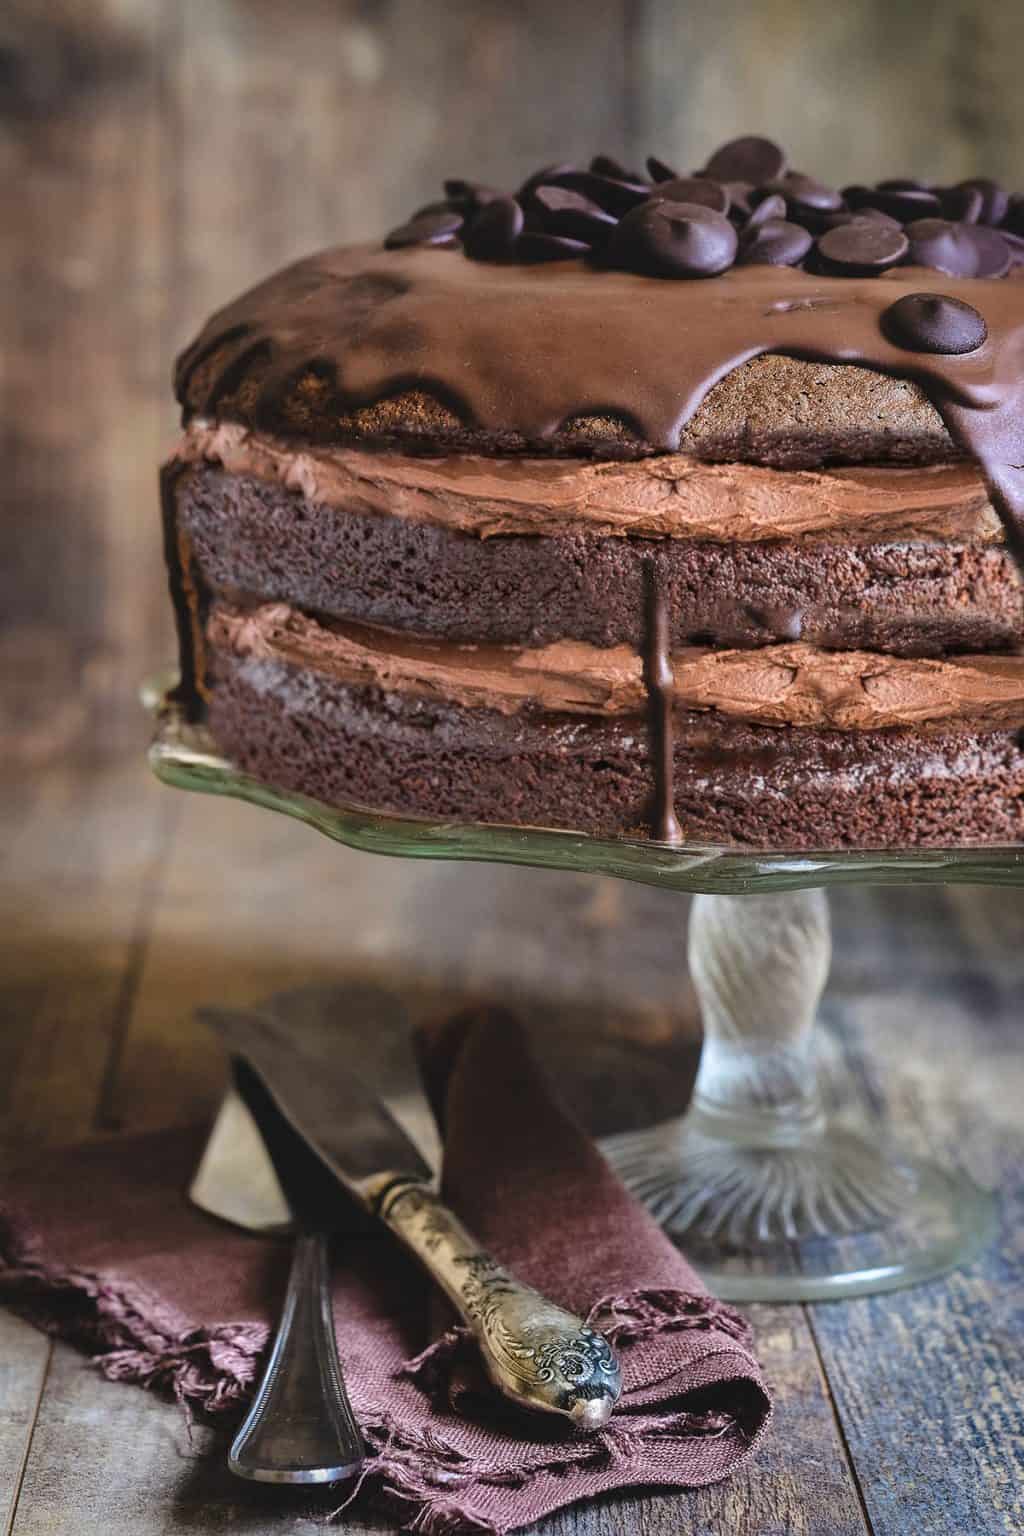 Best EVER Homemade Chocolate Cake | Erren's Kitchen